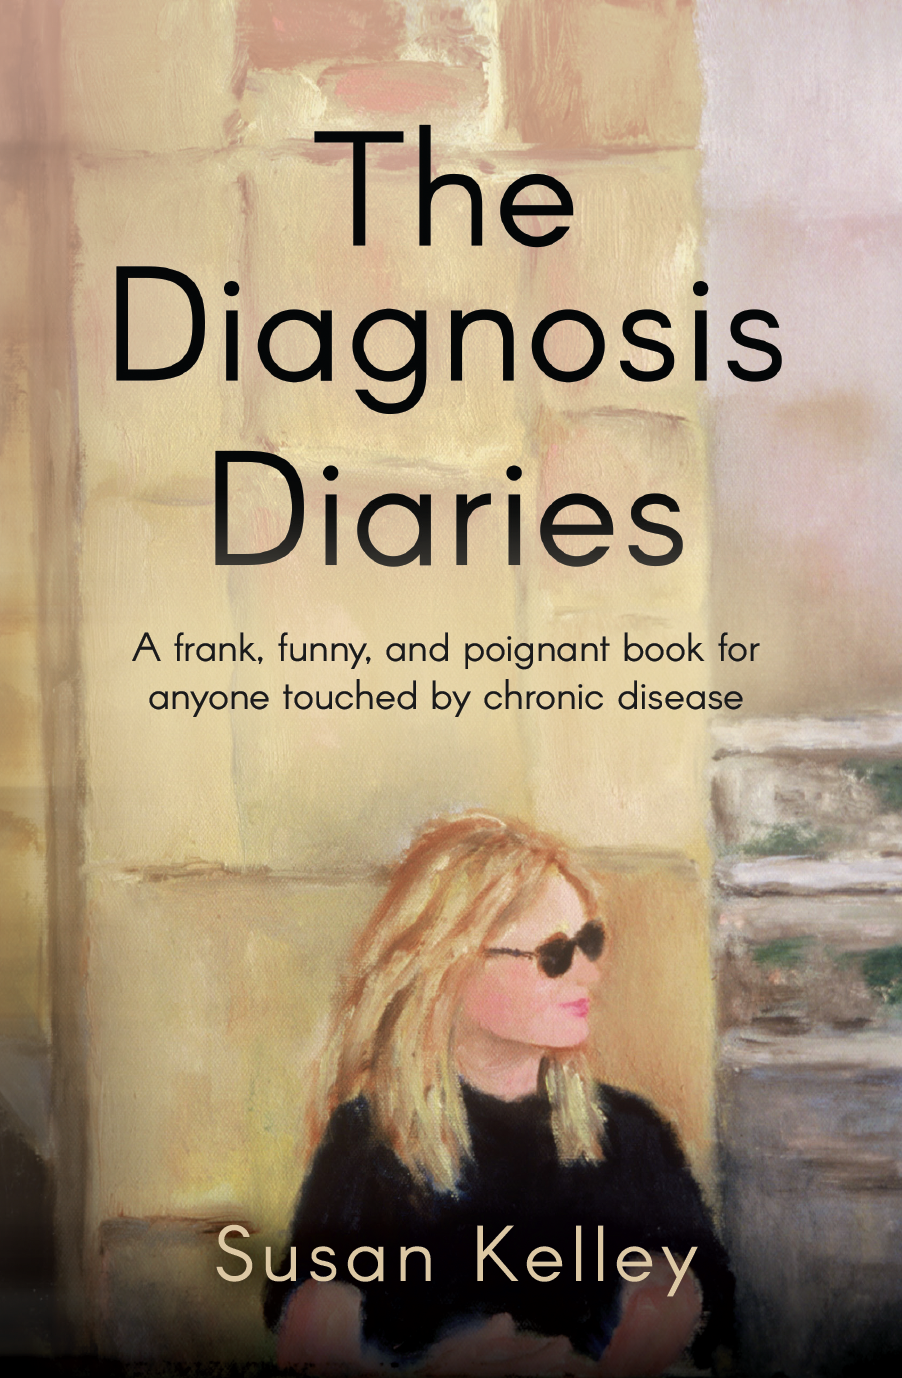 The Diagnosis Diaries by Susan Kelley